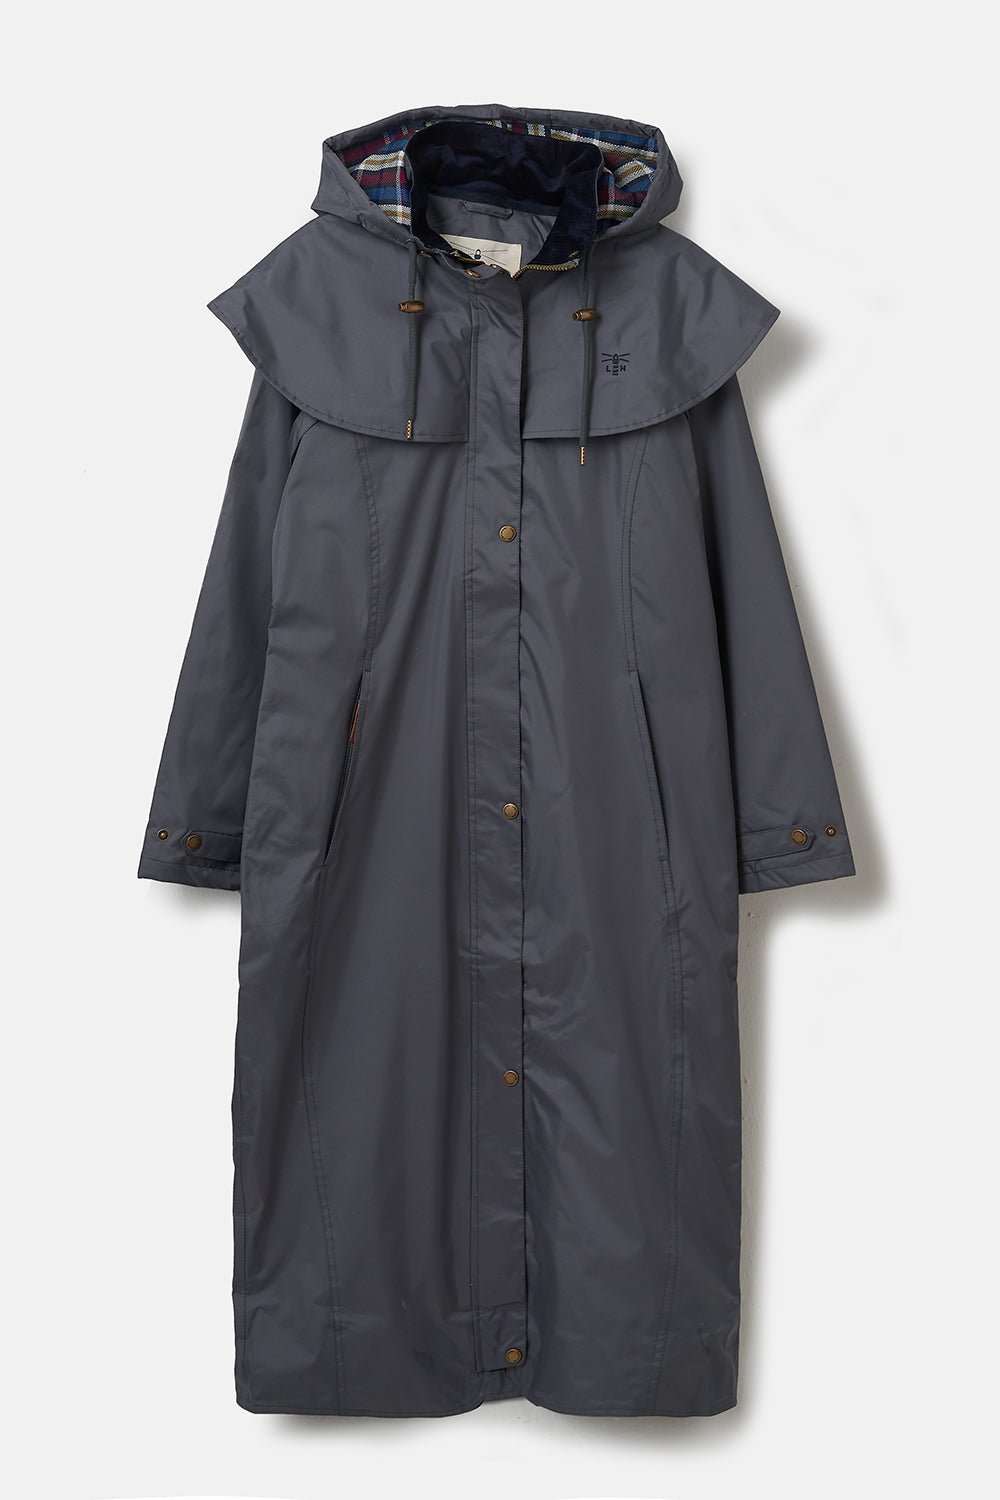 Outback Raincoat - Grey, Women's Long Waterproof Raincoat | Lighthouse